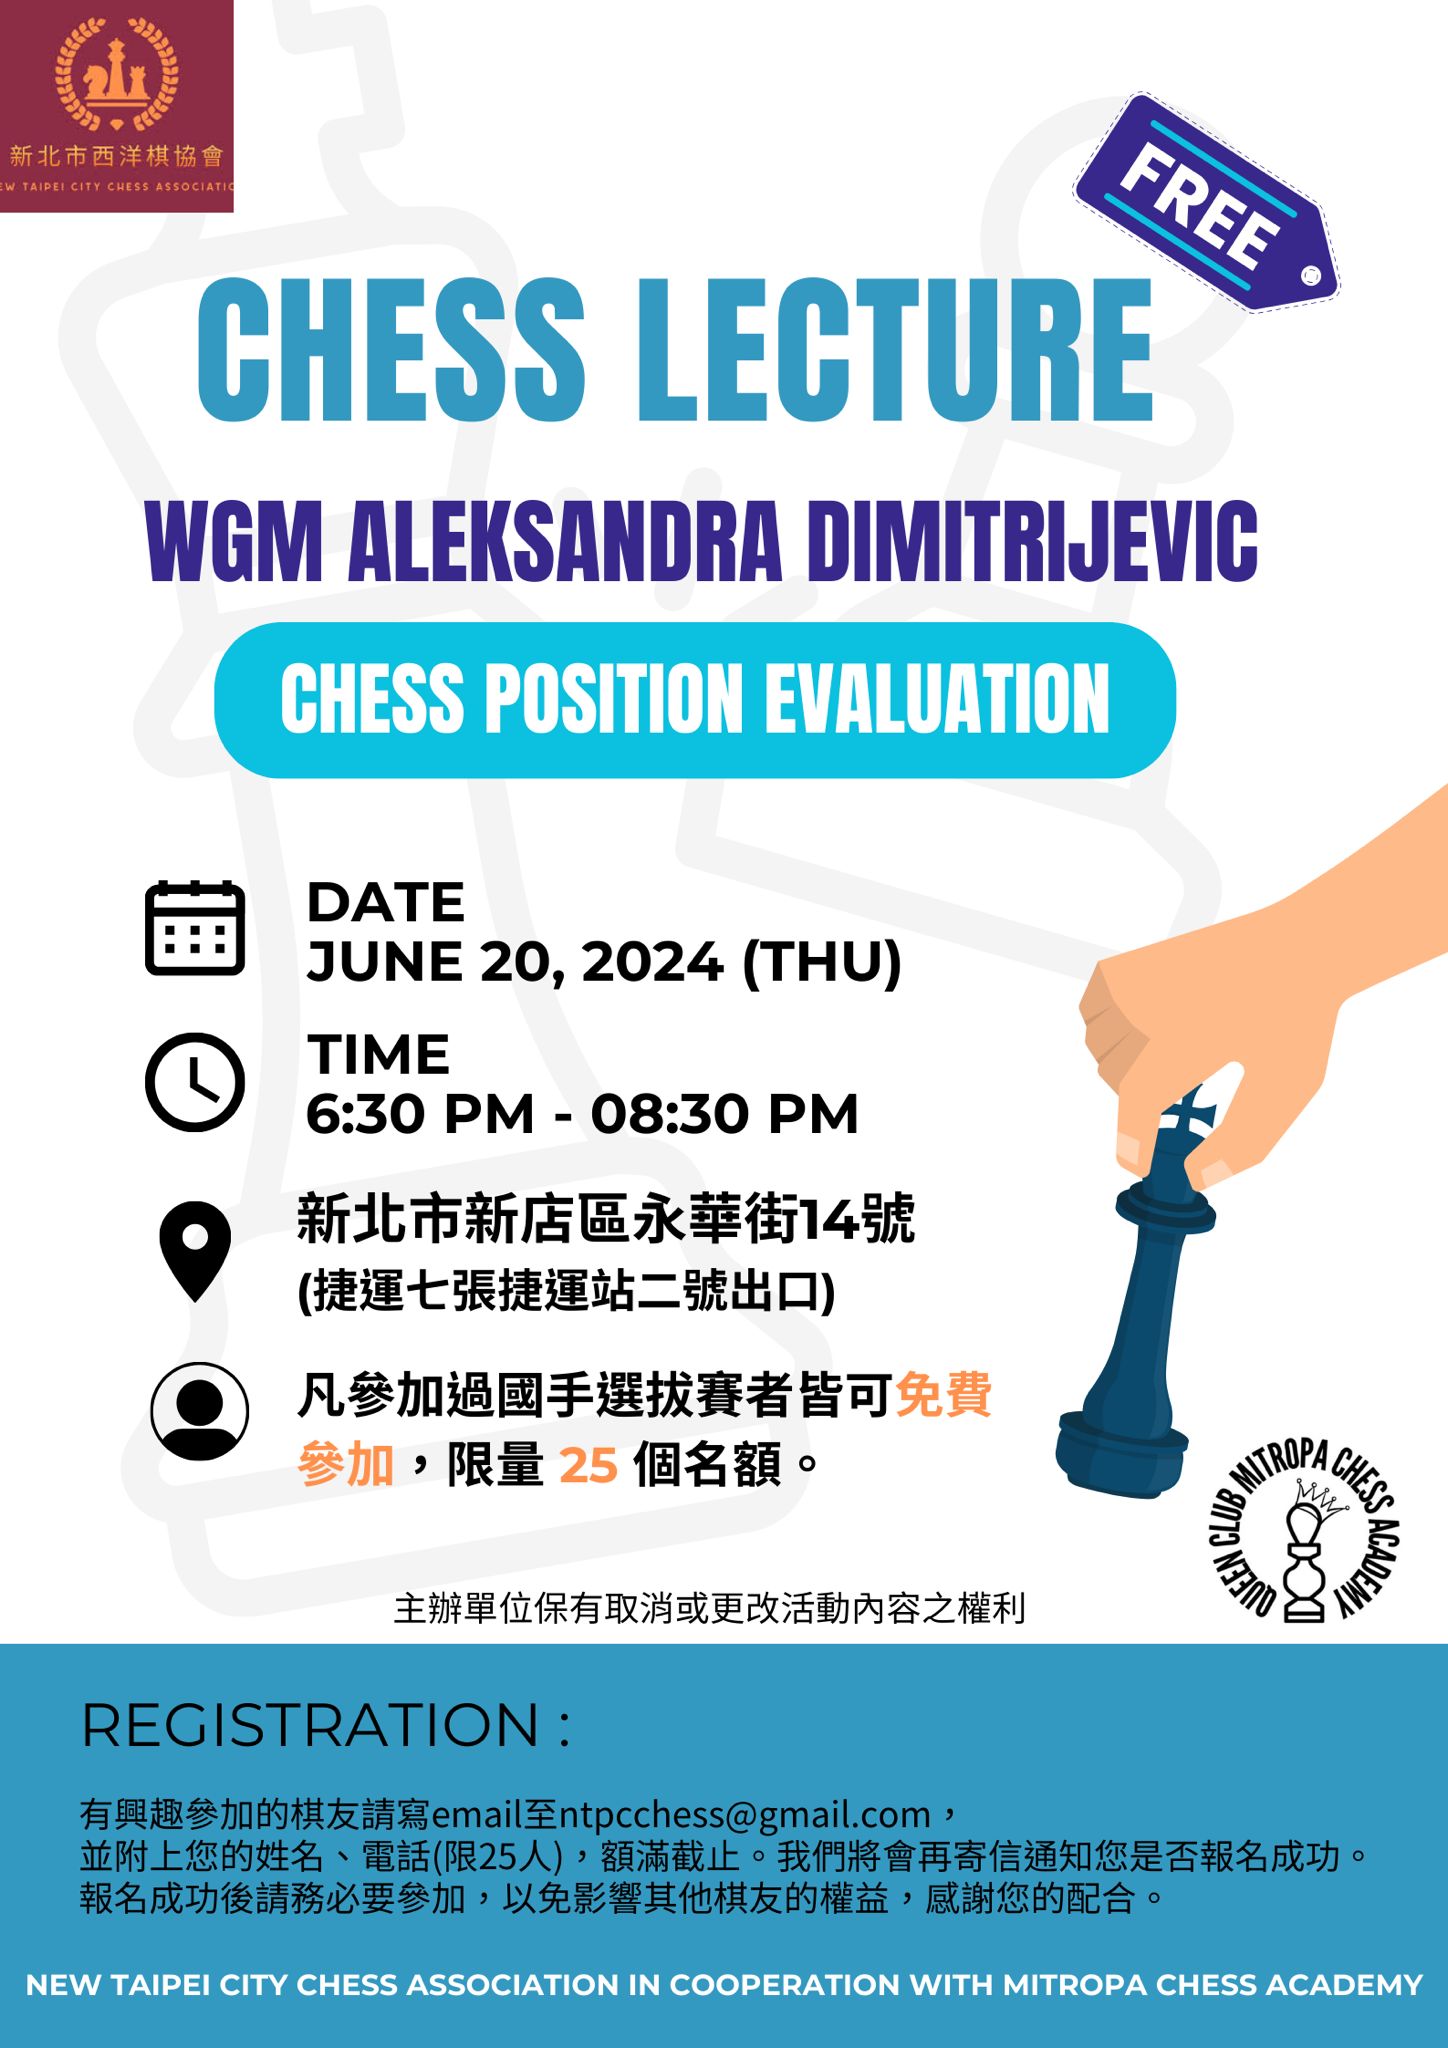 MITROPA Chess Academy goes to Taiwan!